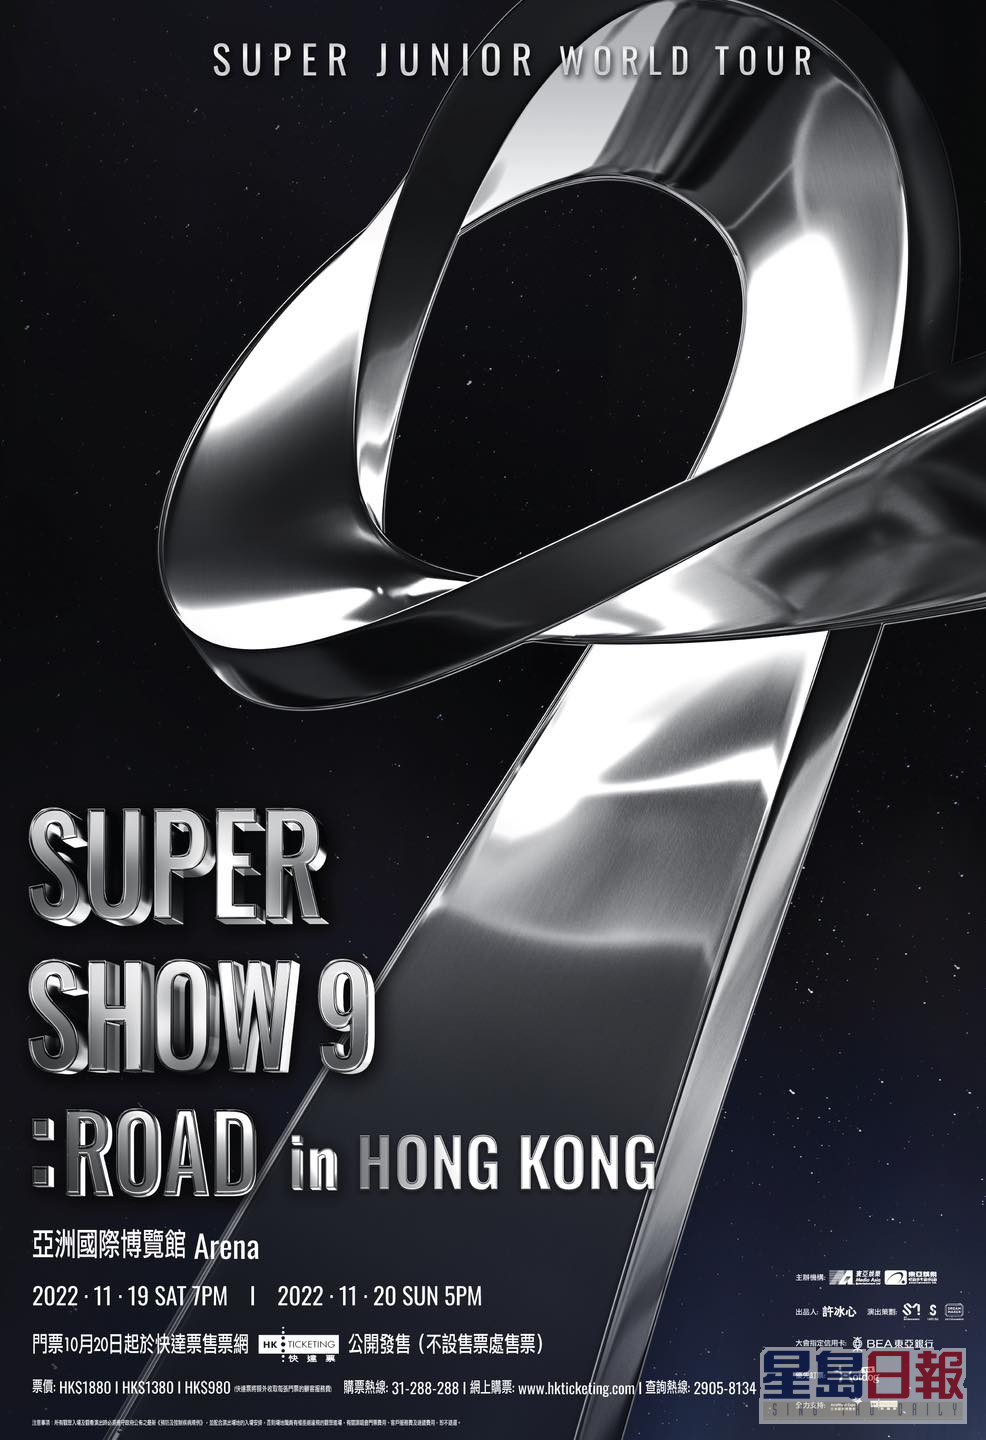 Super Junior香港站演唱会，将于下月在亚洲国际博览馆Arena举行。